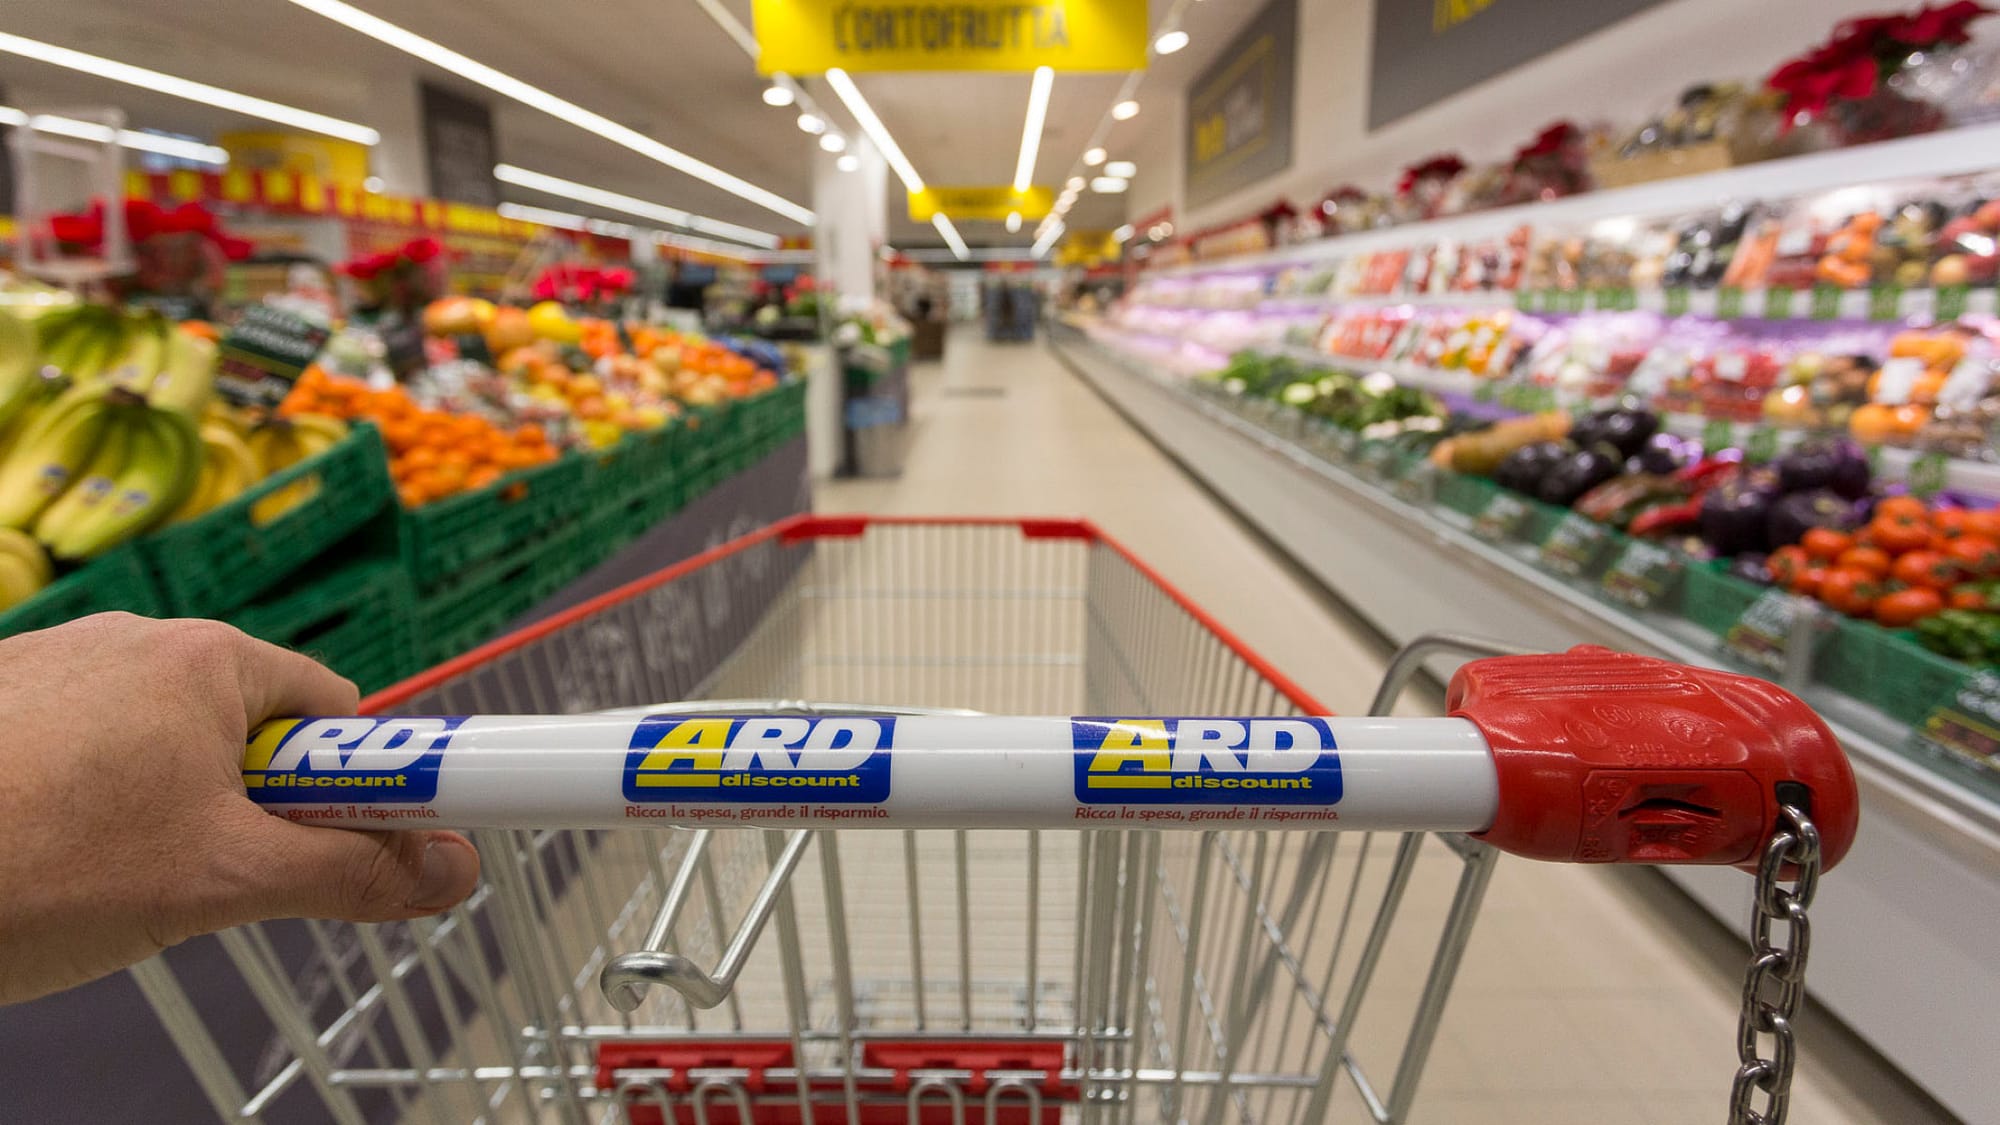 ARD Retail concept design foto1